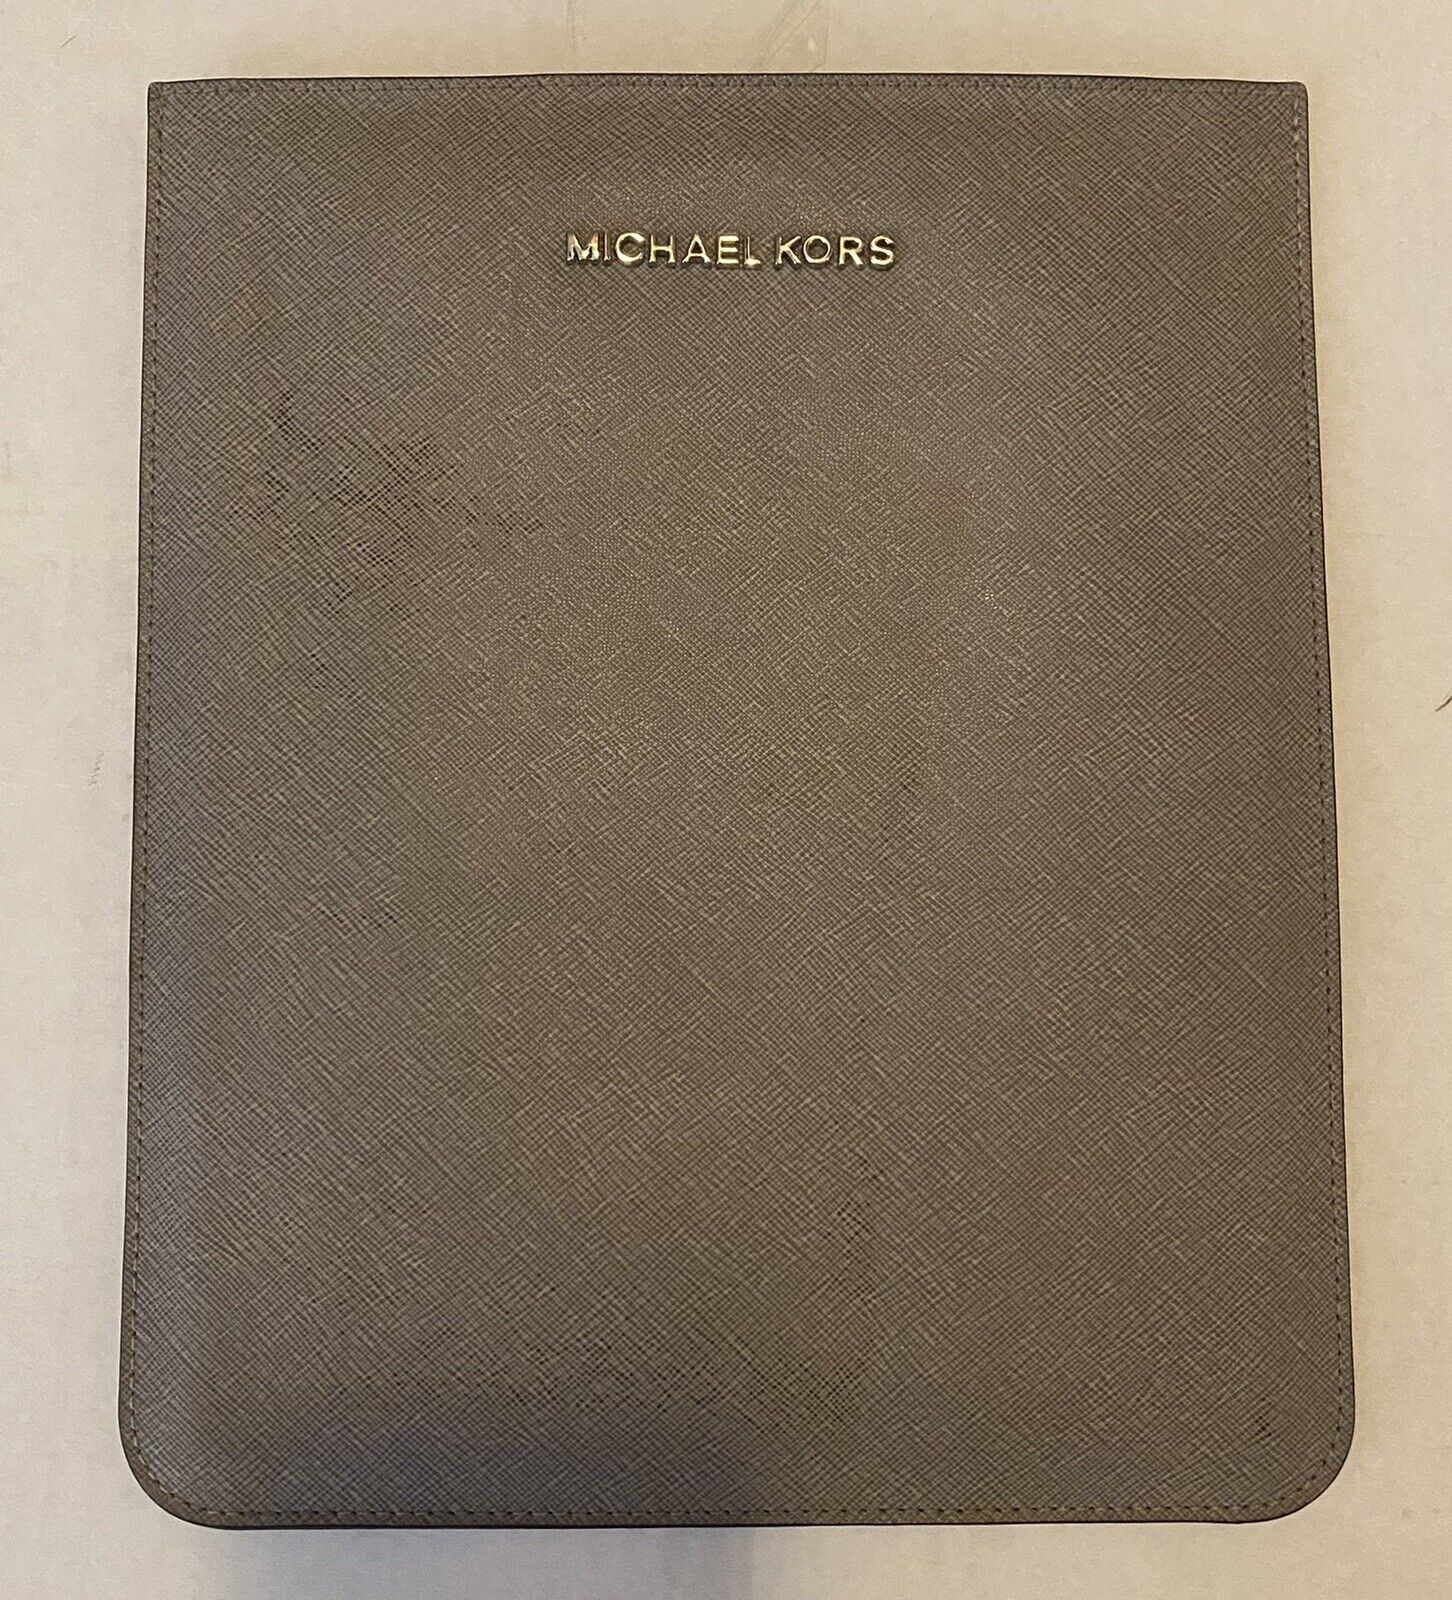 Michael Kors Beige Leather Ipad Sleeve (2nd Generation) - iPad Not Included